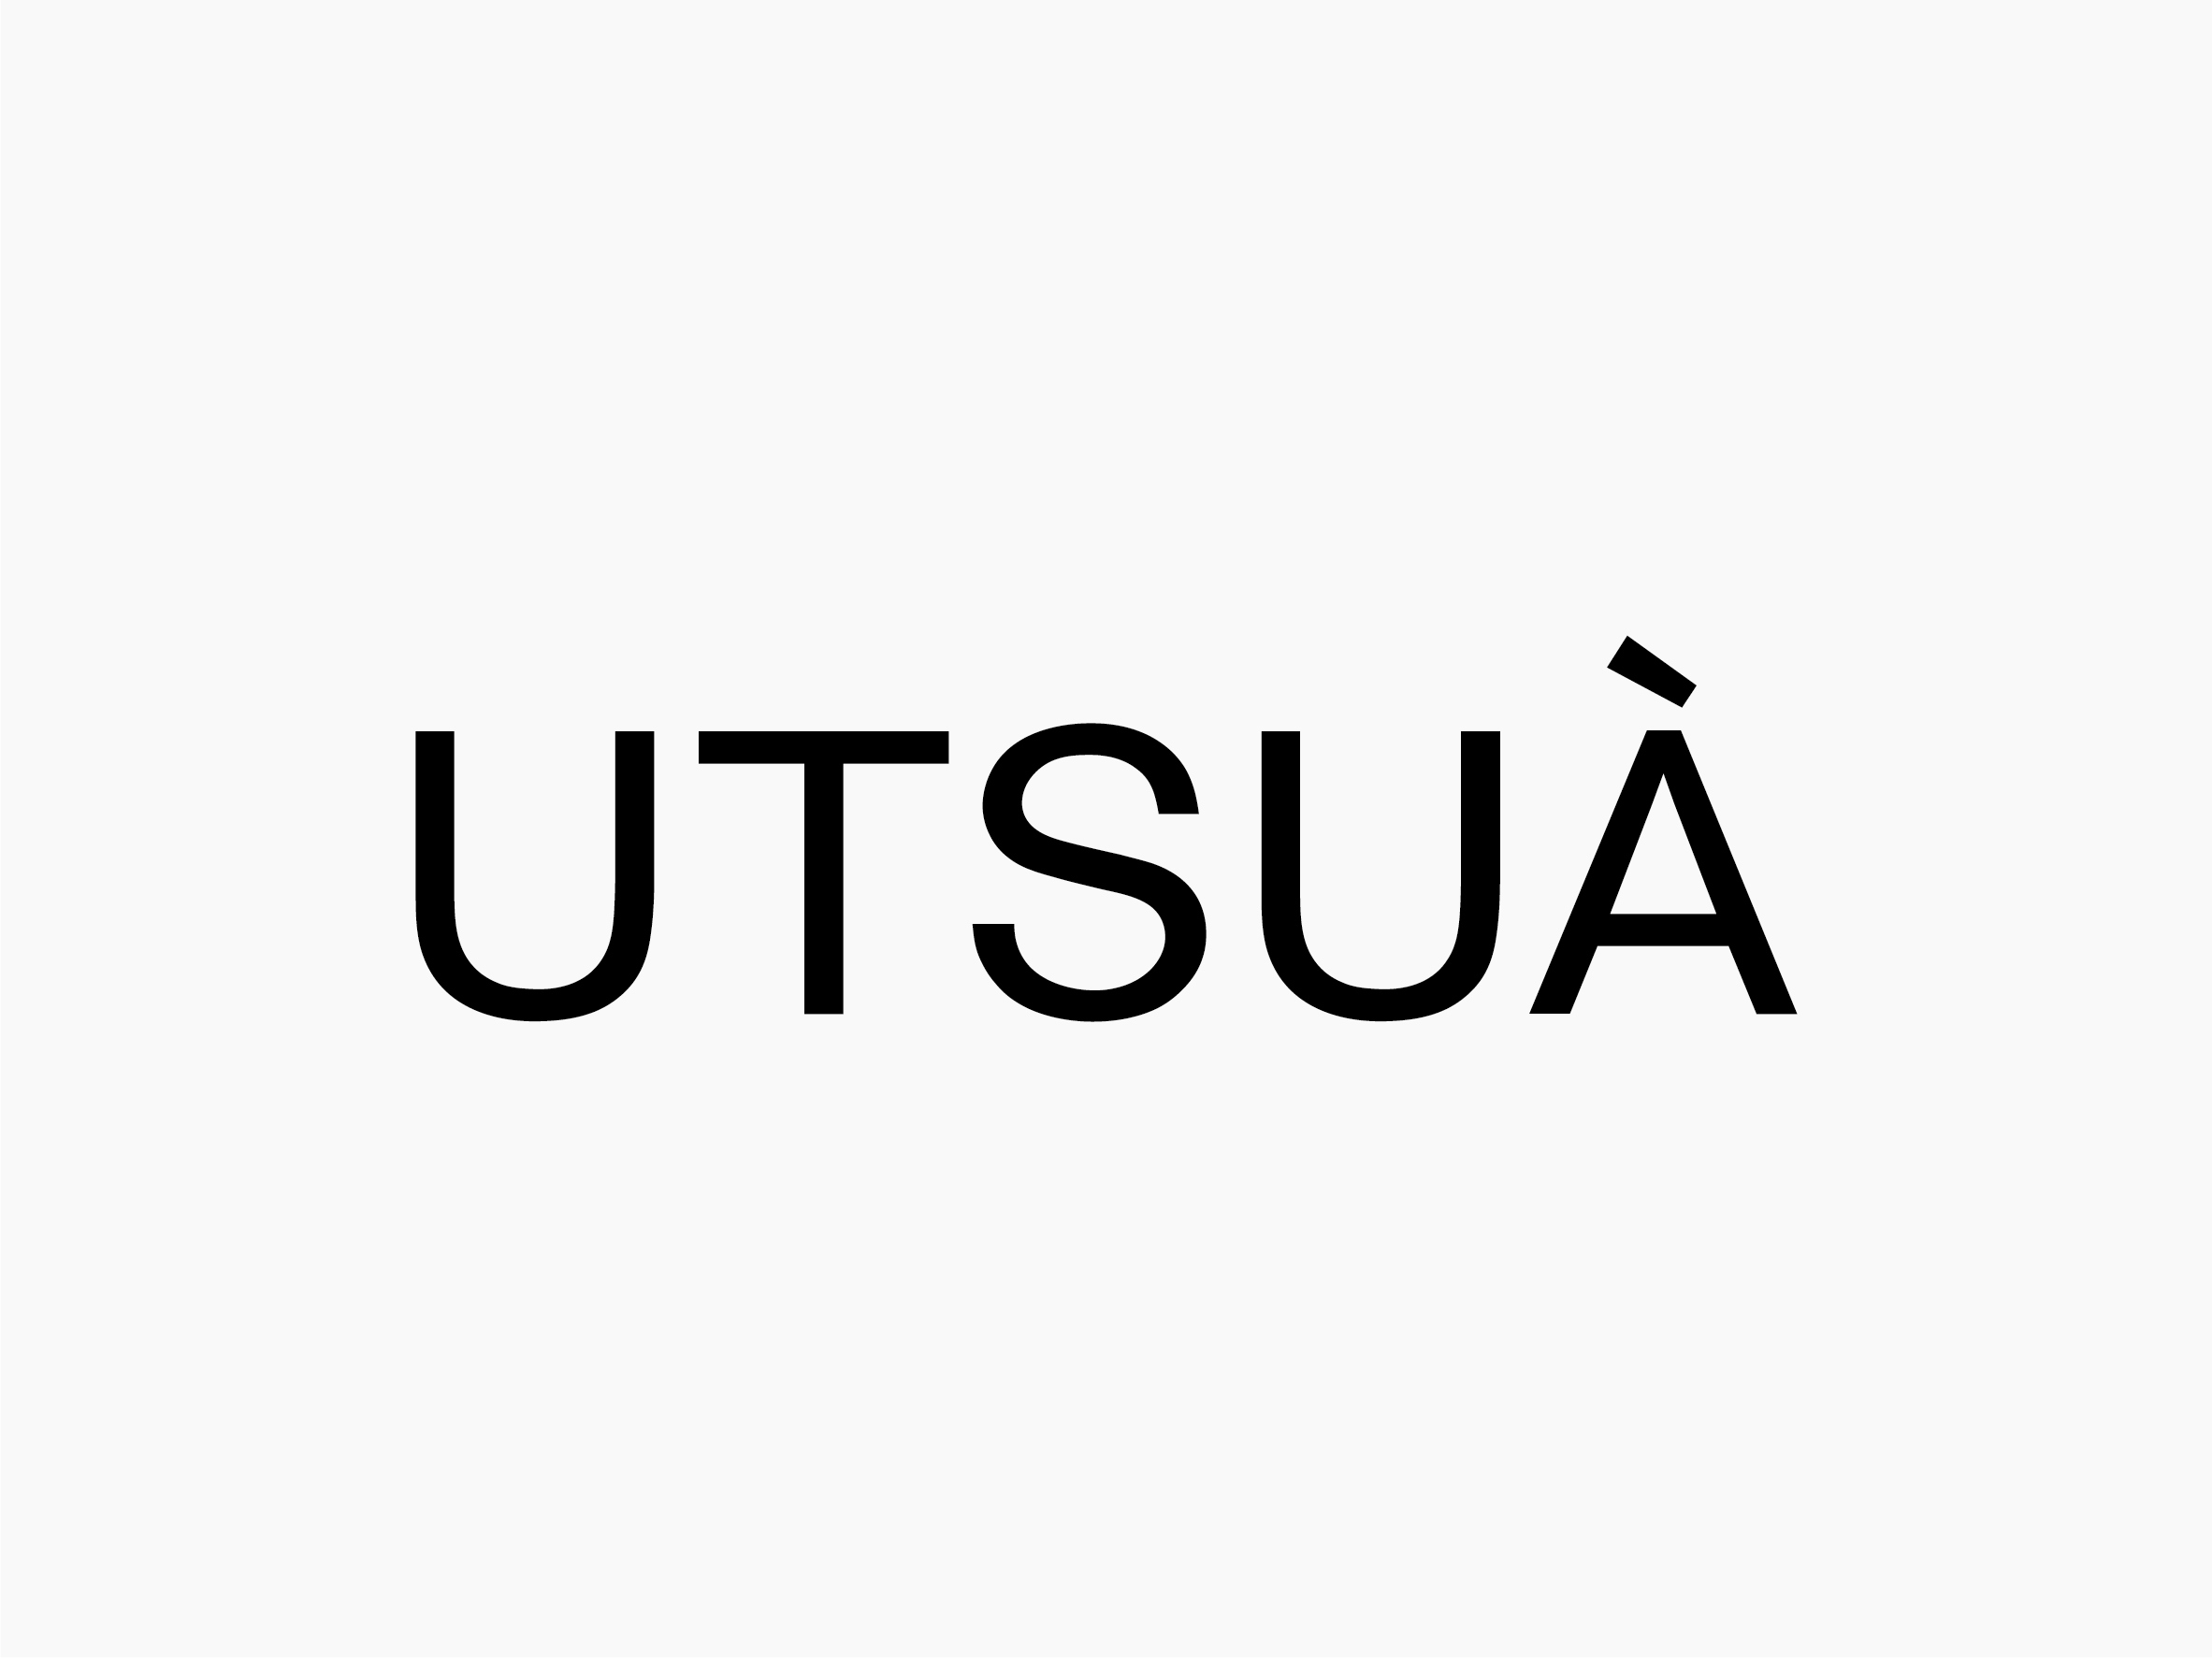 Utsua logo type